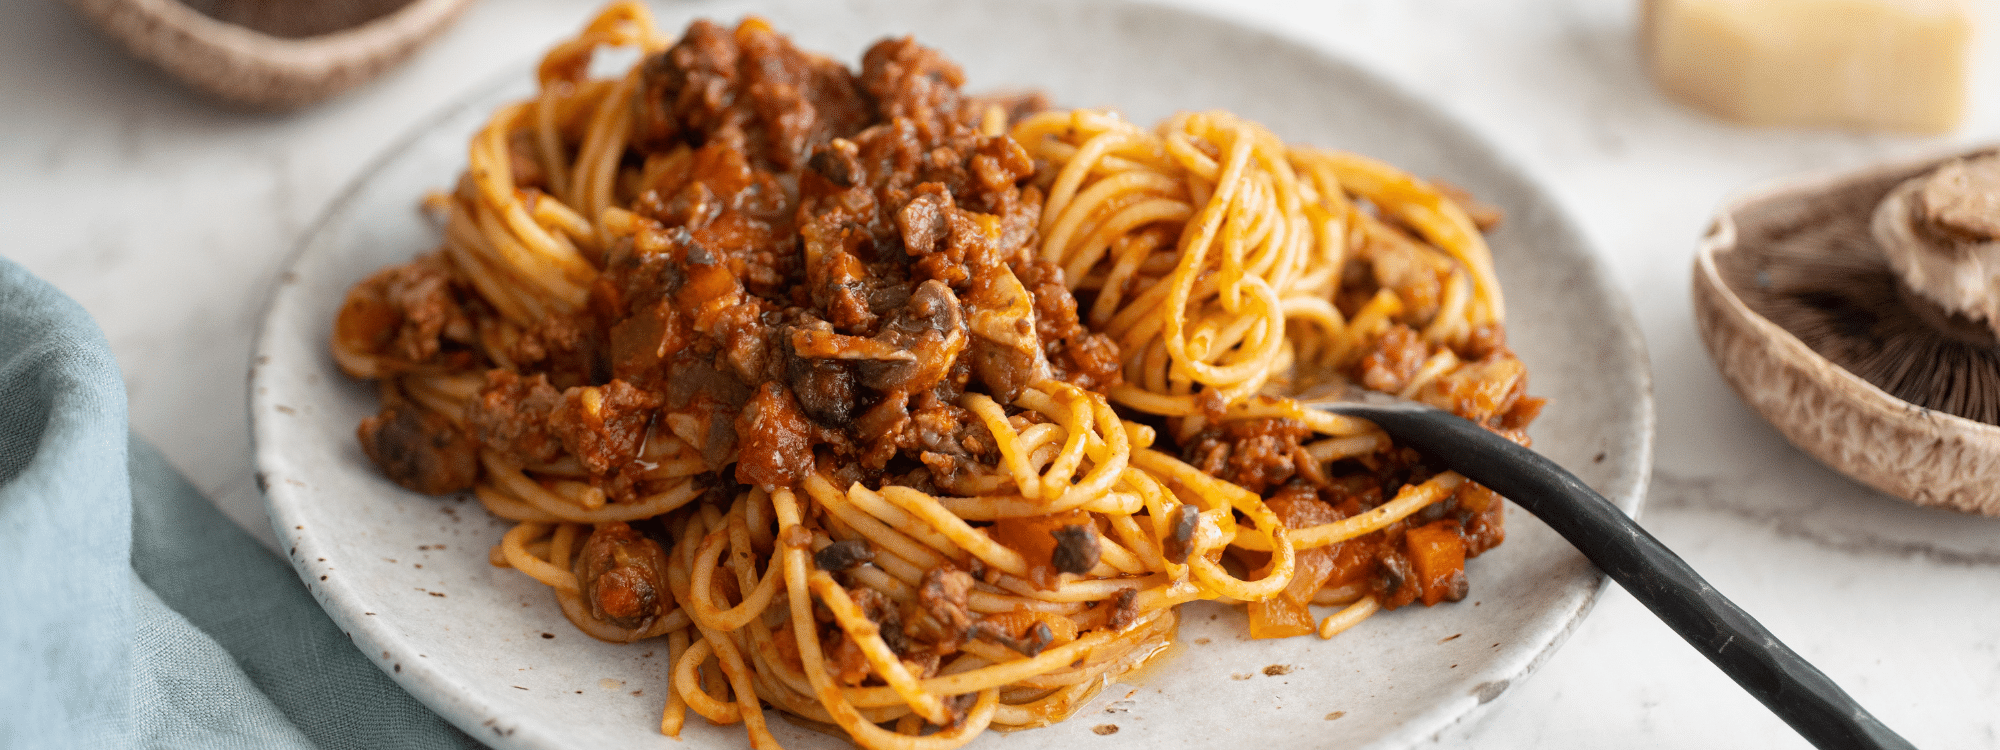 THE BLEND - Beef and Mushroom Blended Spaghetti Bolognese